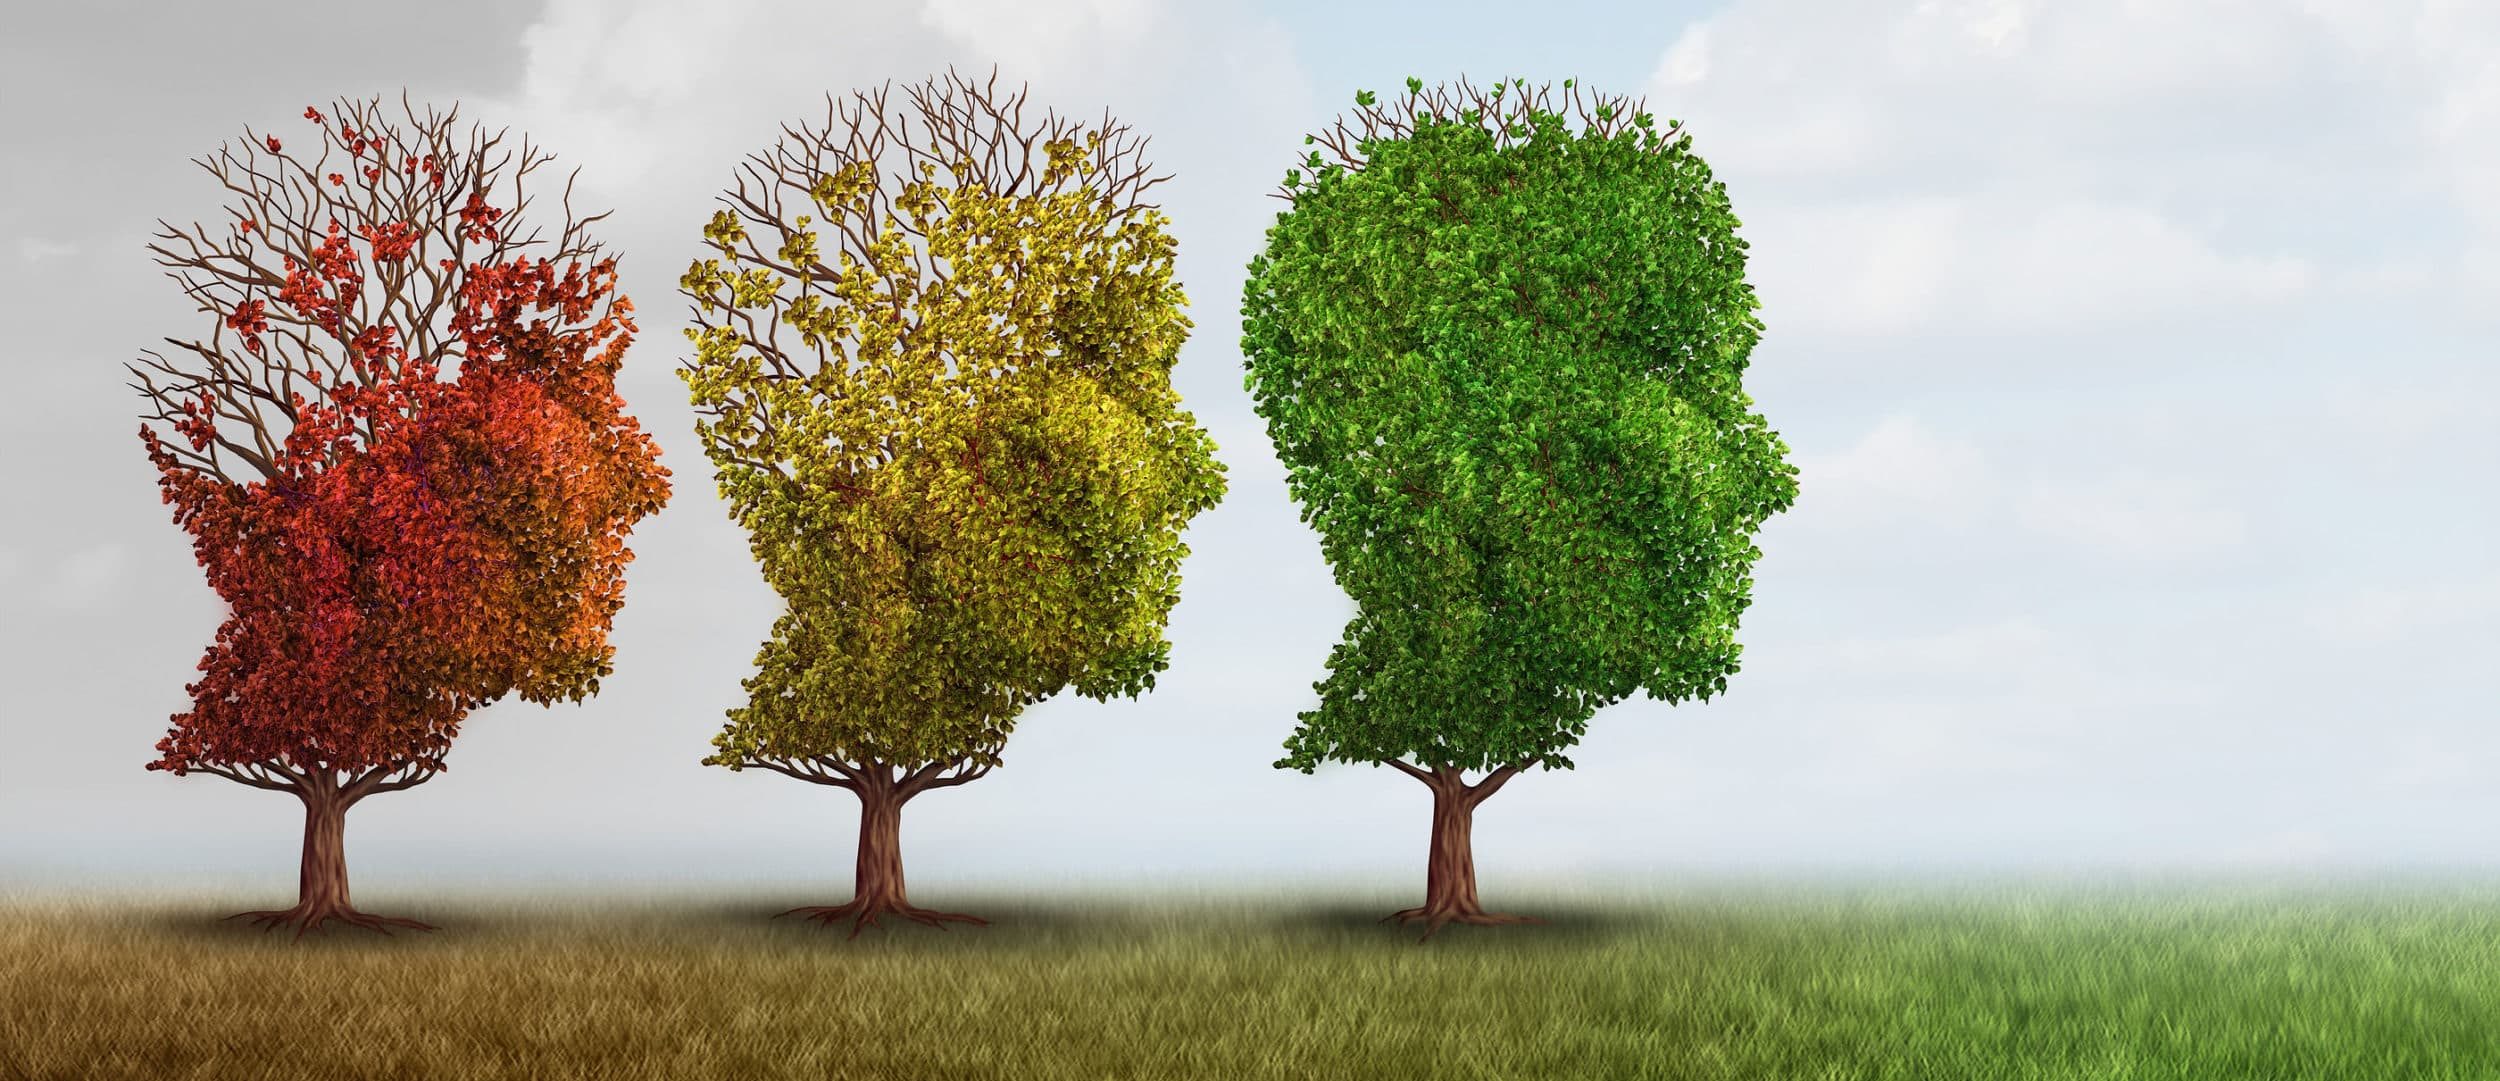 Dementia symbolism for alzheimers disease